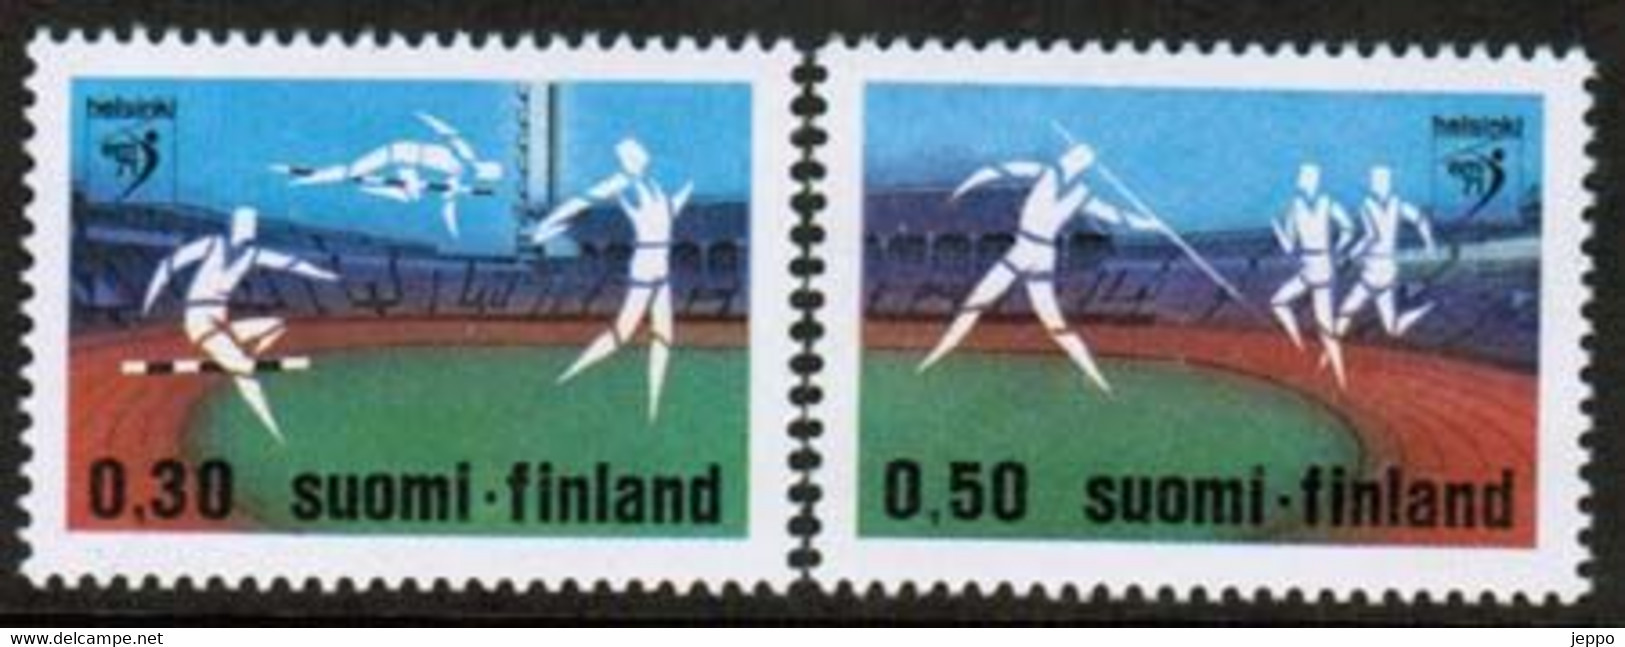 1971 Finland European Athletic Shampionships Complete Set MNH. - Unused Stamps